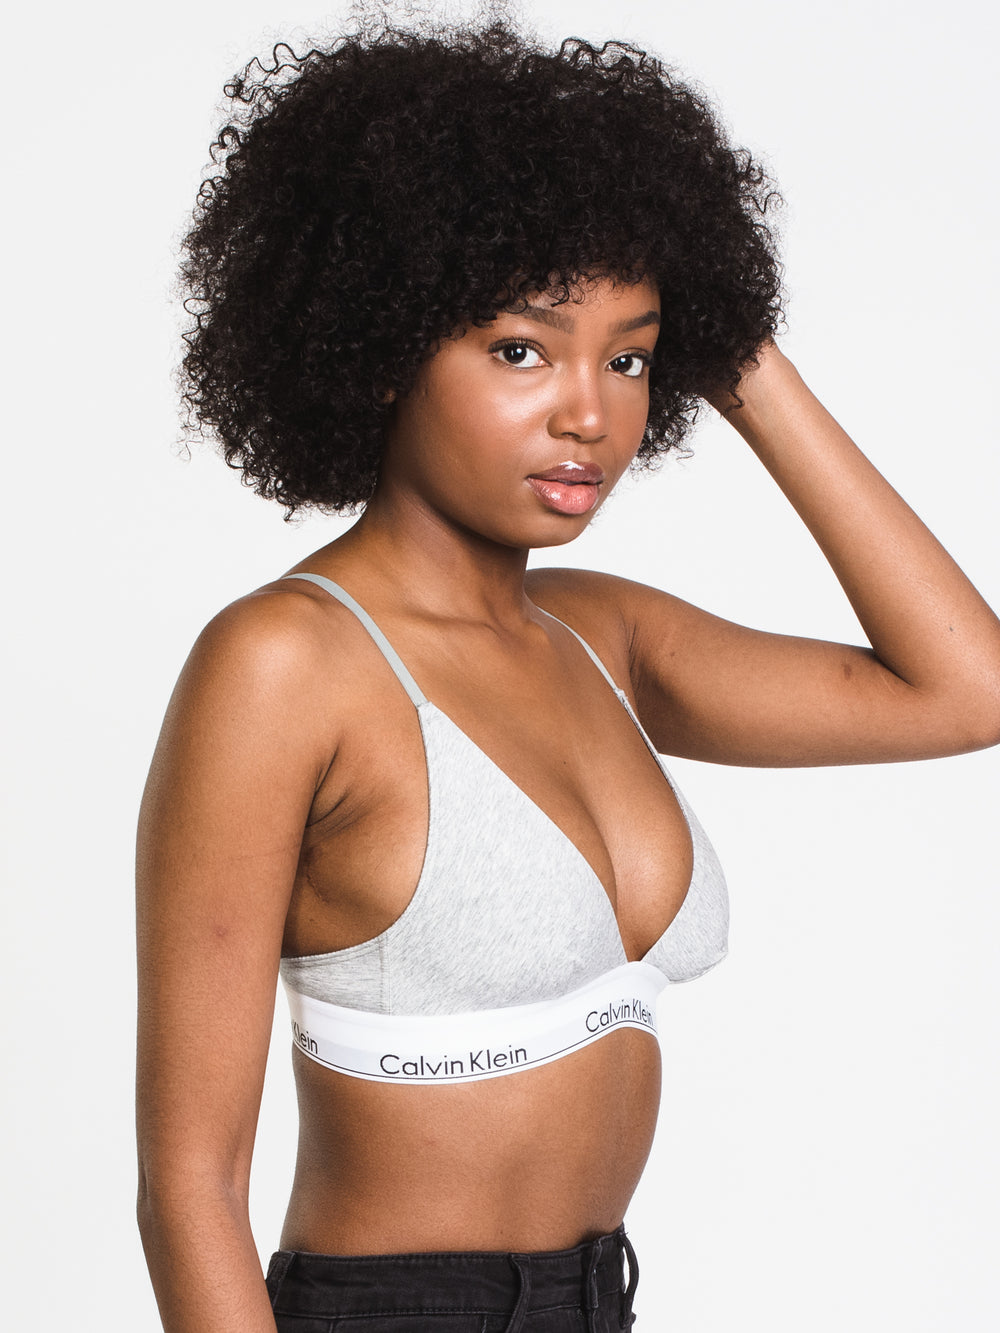 Calvin Klein Women's Modern Cotton Bralette and Bikini Set, White, X-Small